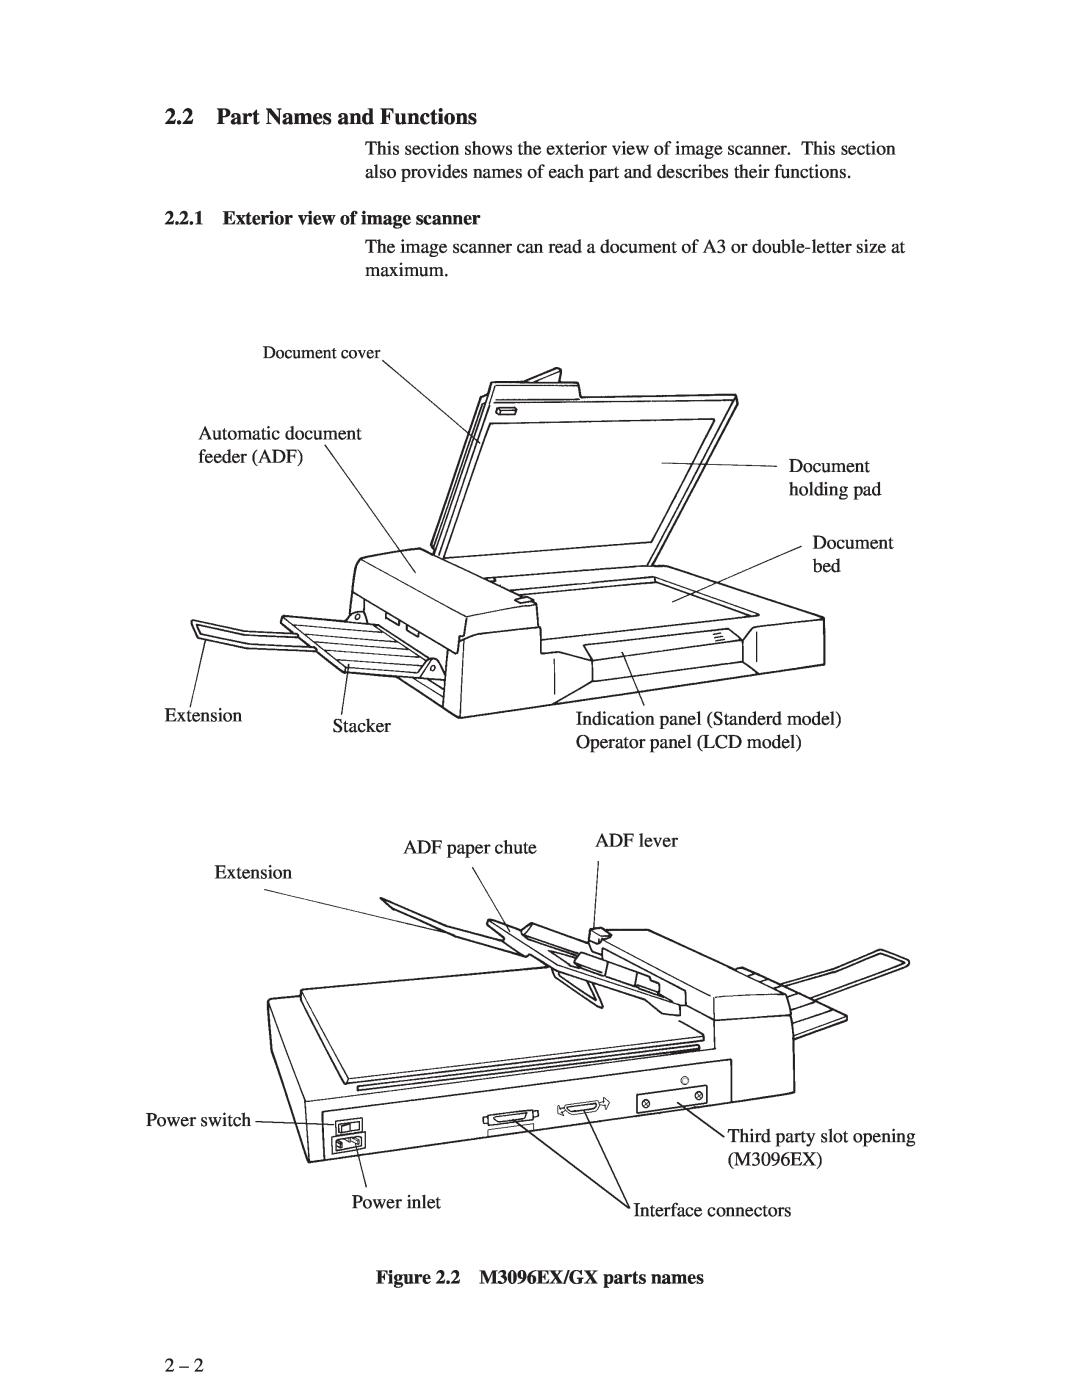 Fujitsu M3096GX manual Part Names and Functions, Exterior view of image scanner, 2 M3096EX/GX parts names 